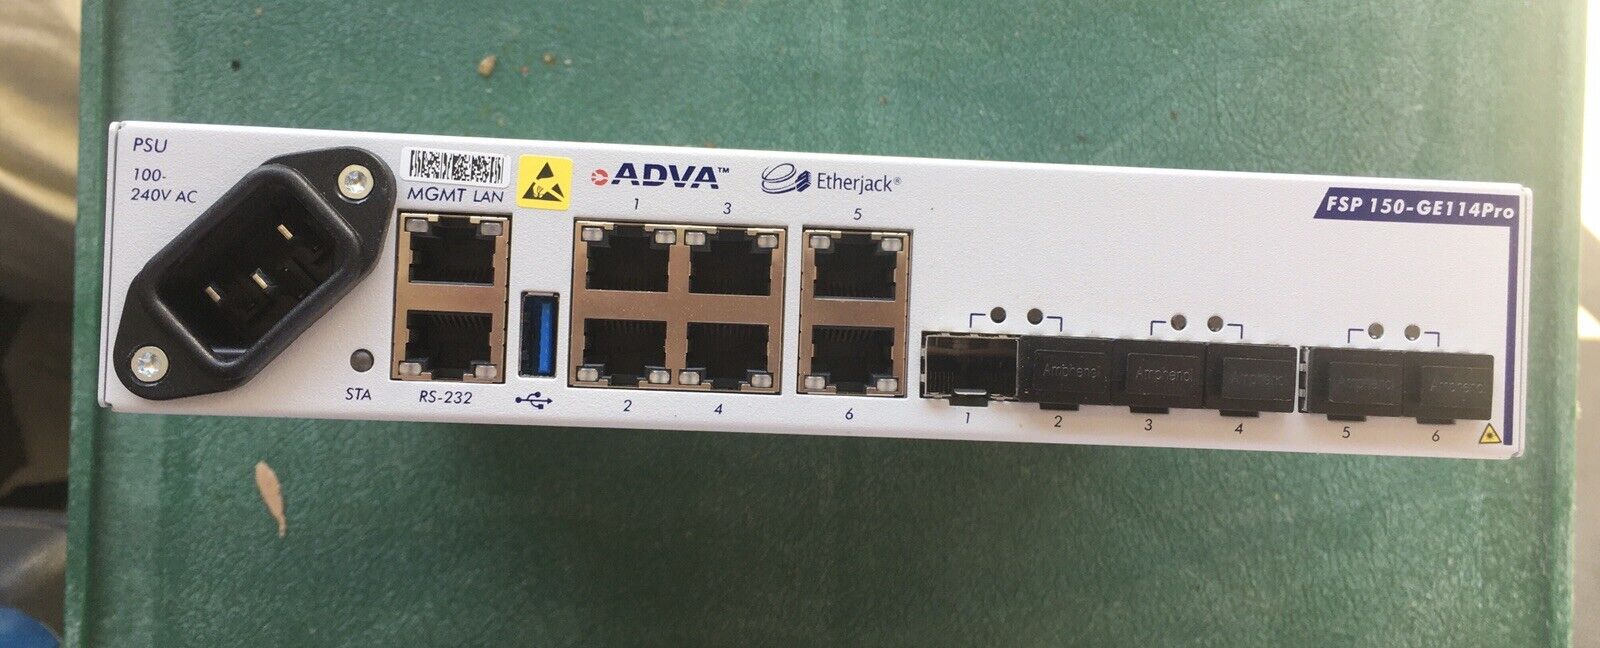 ADVA FSP150-GE114 Pro Etherjack Carrier Ethernet Demarcation Device